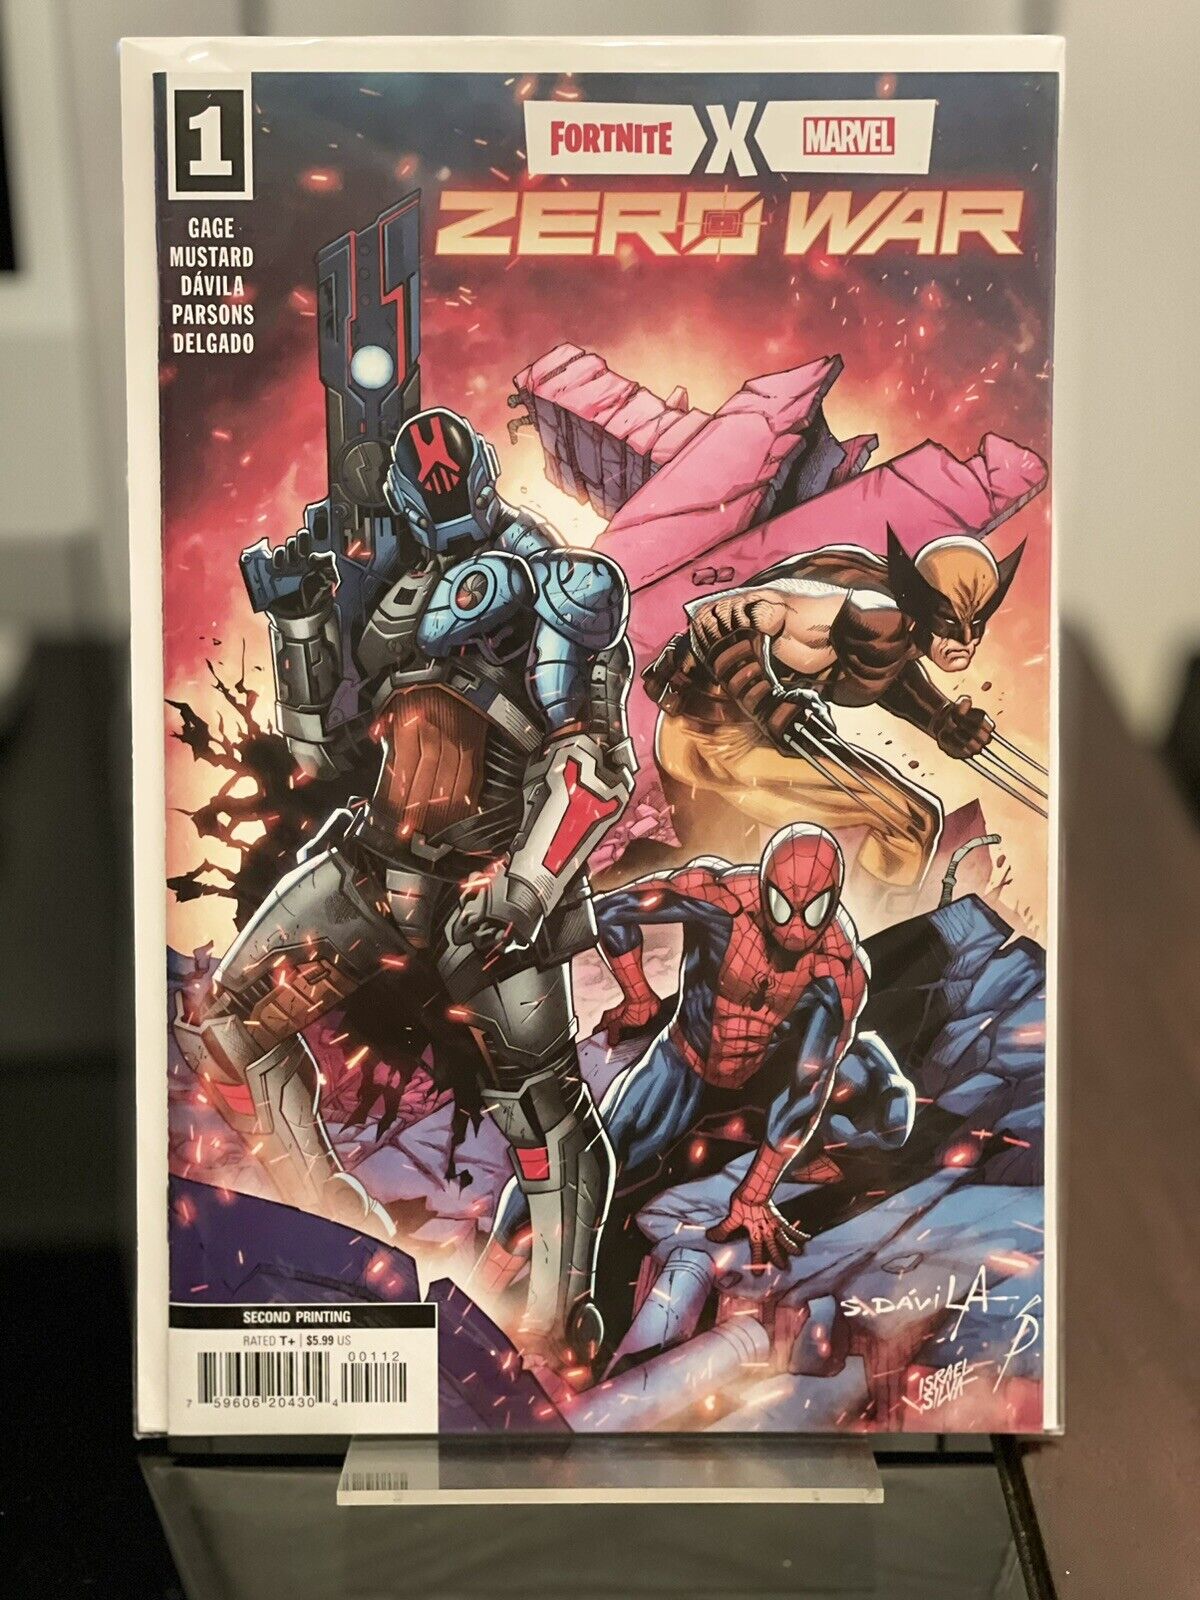 Fortnite X Marvel Zero War #1 (Of 5) 2ND Printing Sergio Davila Variant Cover